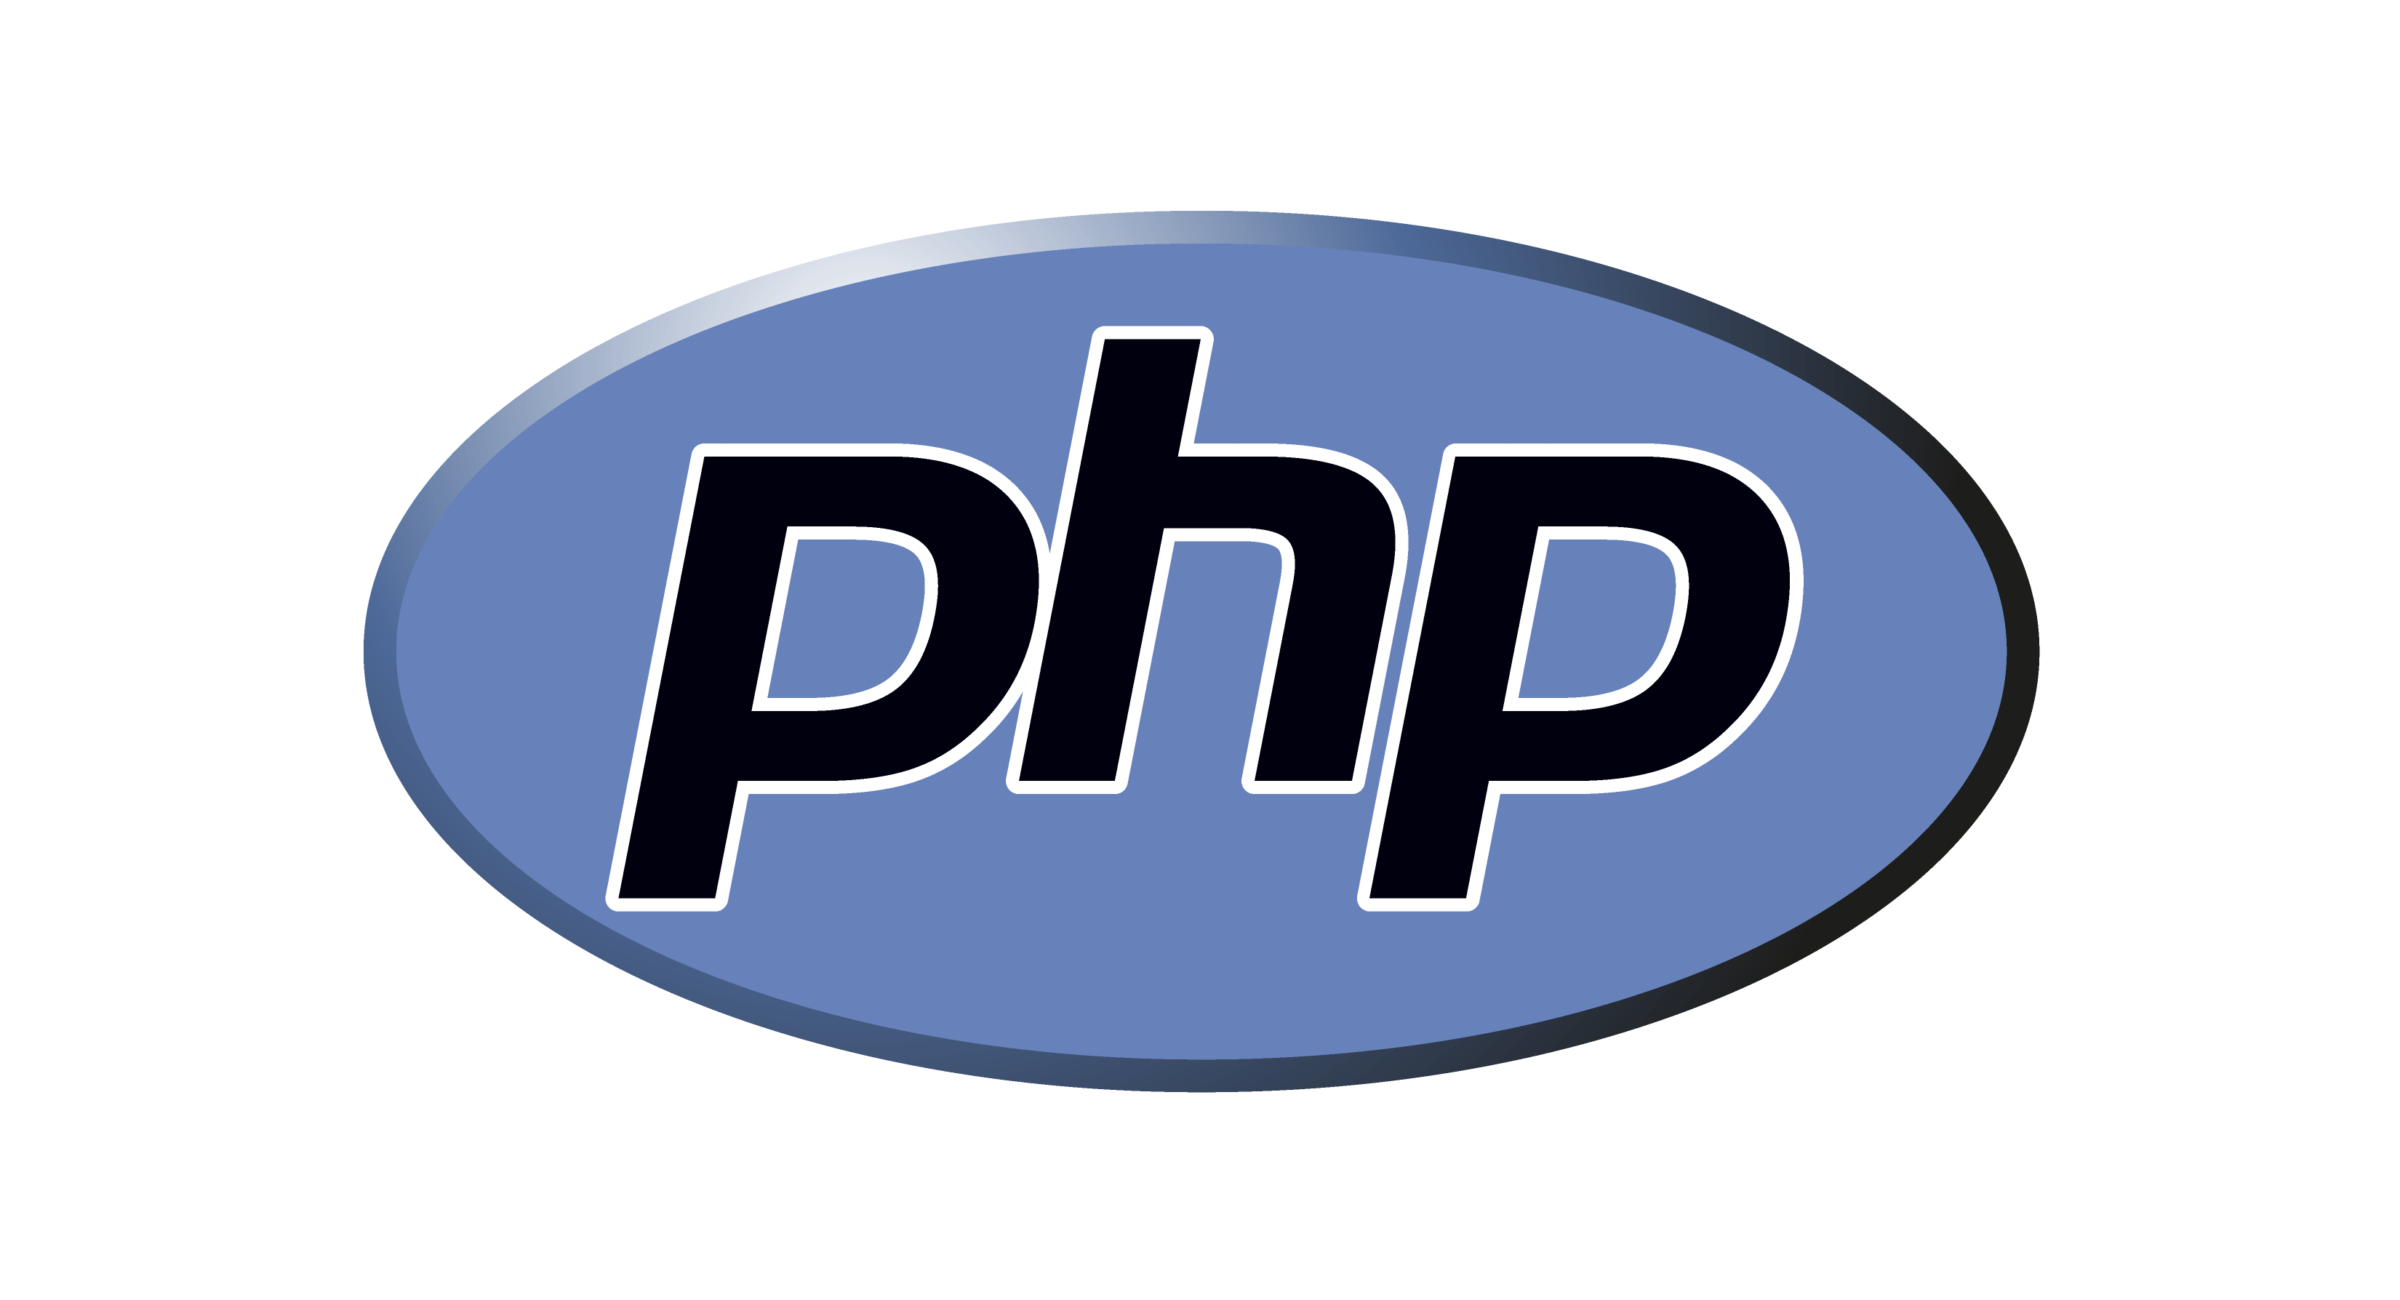 Php логотип. Logo язык программирования. Программирование логотип. Php картинка. Php 7.0